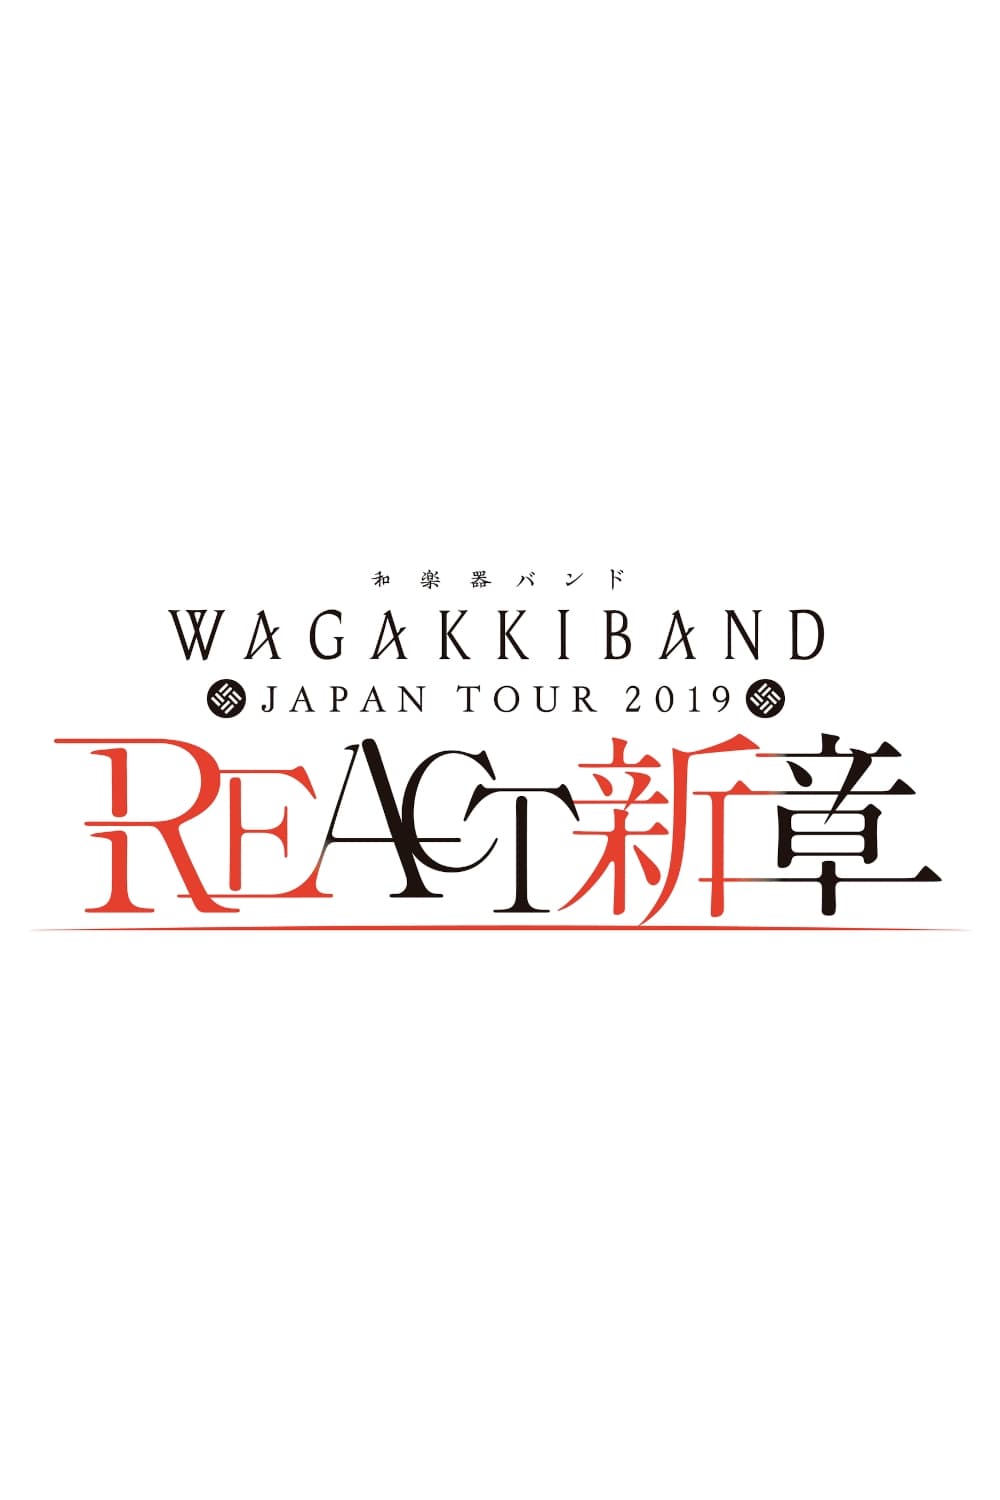 Wagakki Band Japan Tour 2019 REACT -New Chapter-